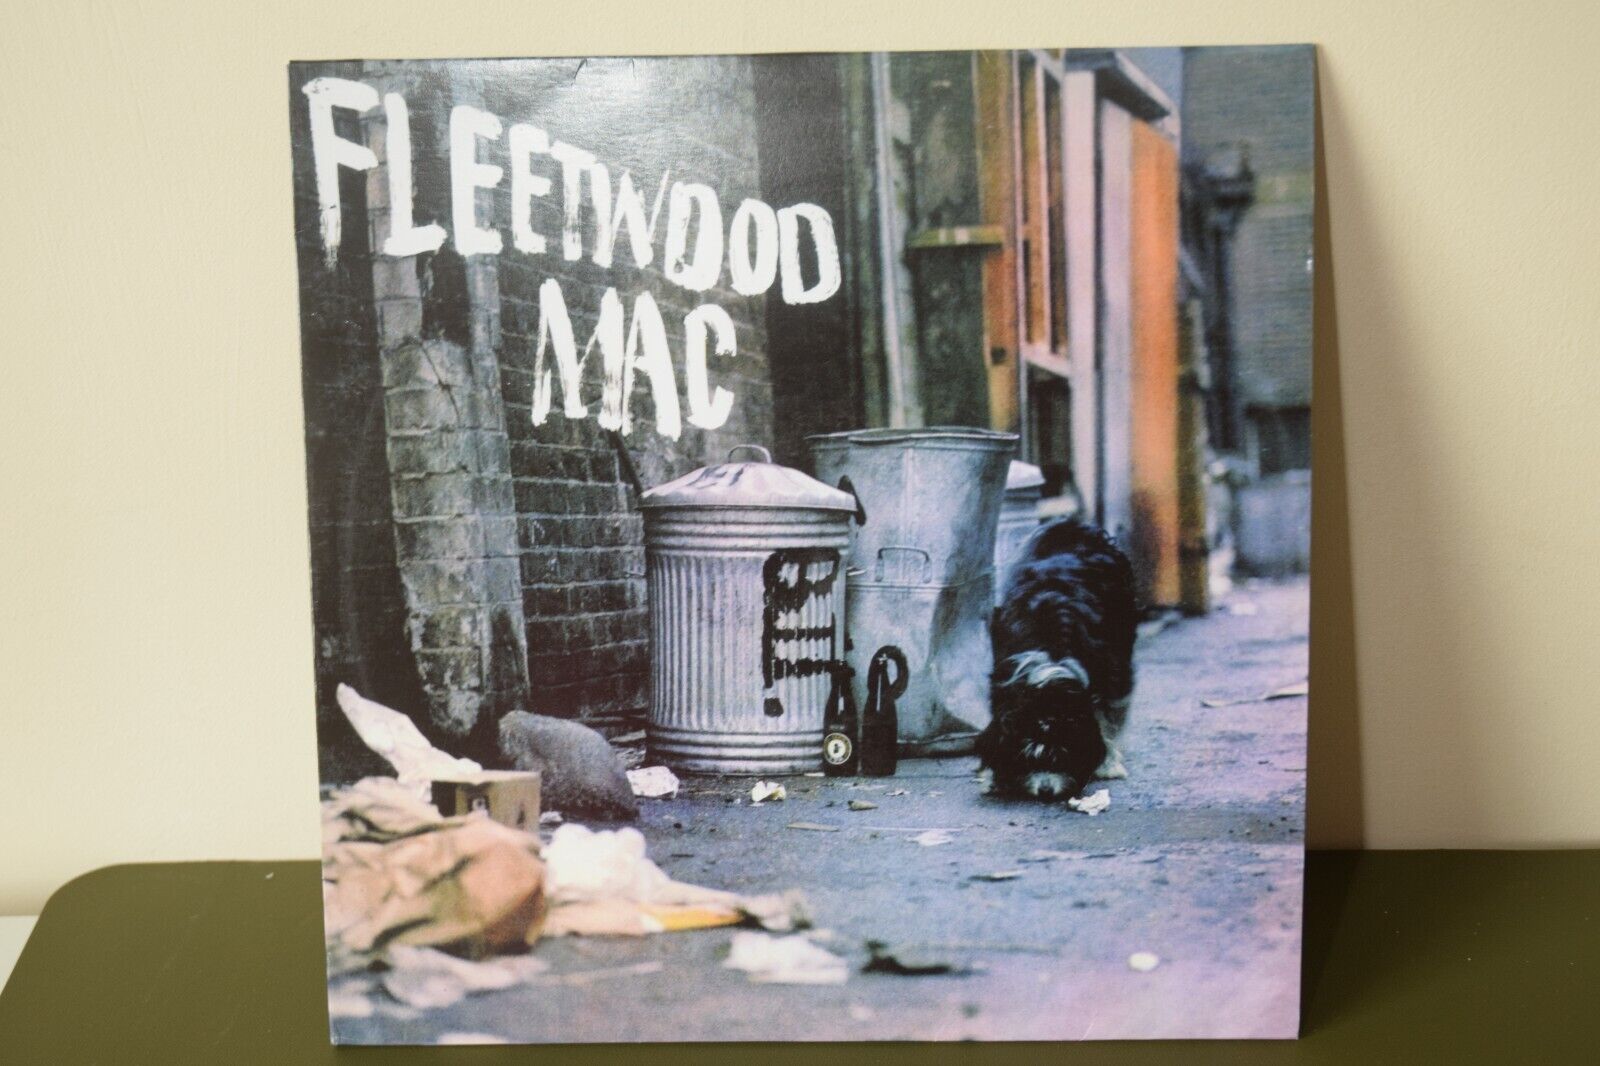 Fleetwood Mac by Fleetwood Mac Peter Green's Vinyl LP Album 2011